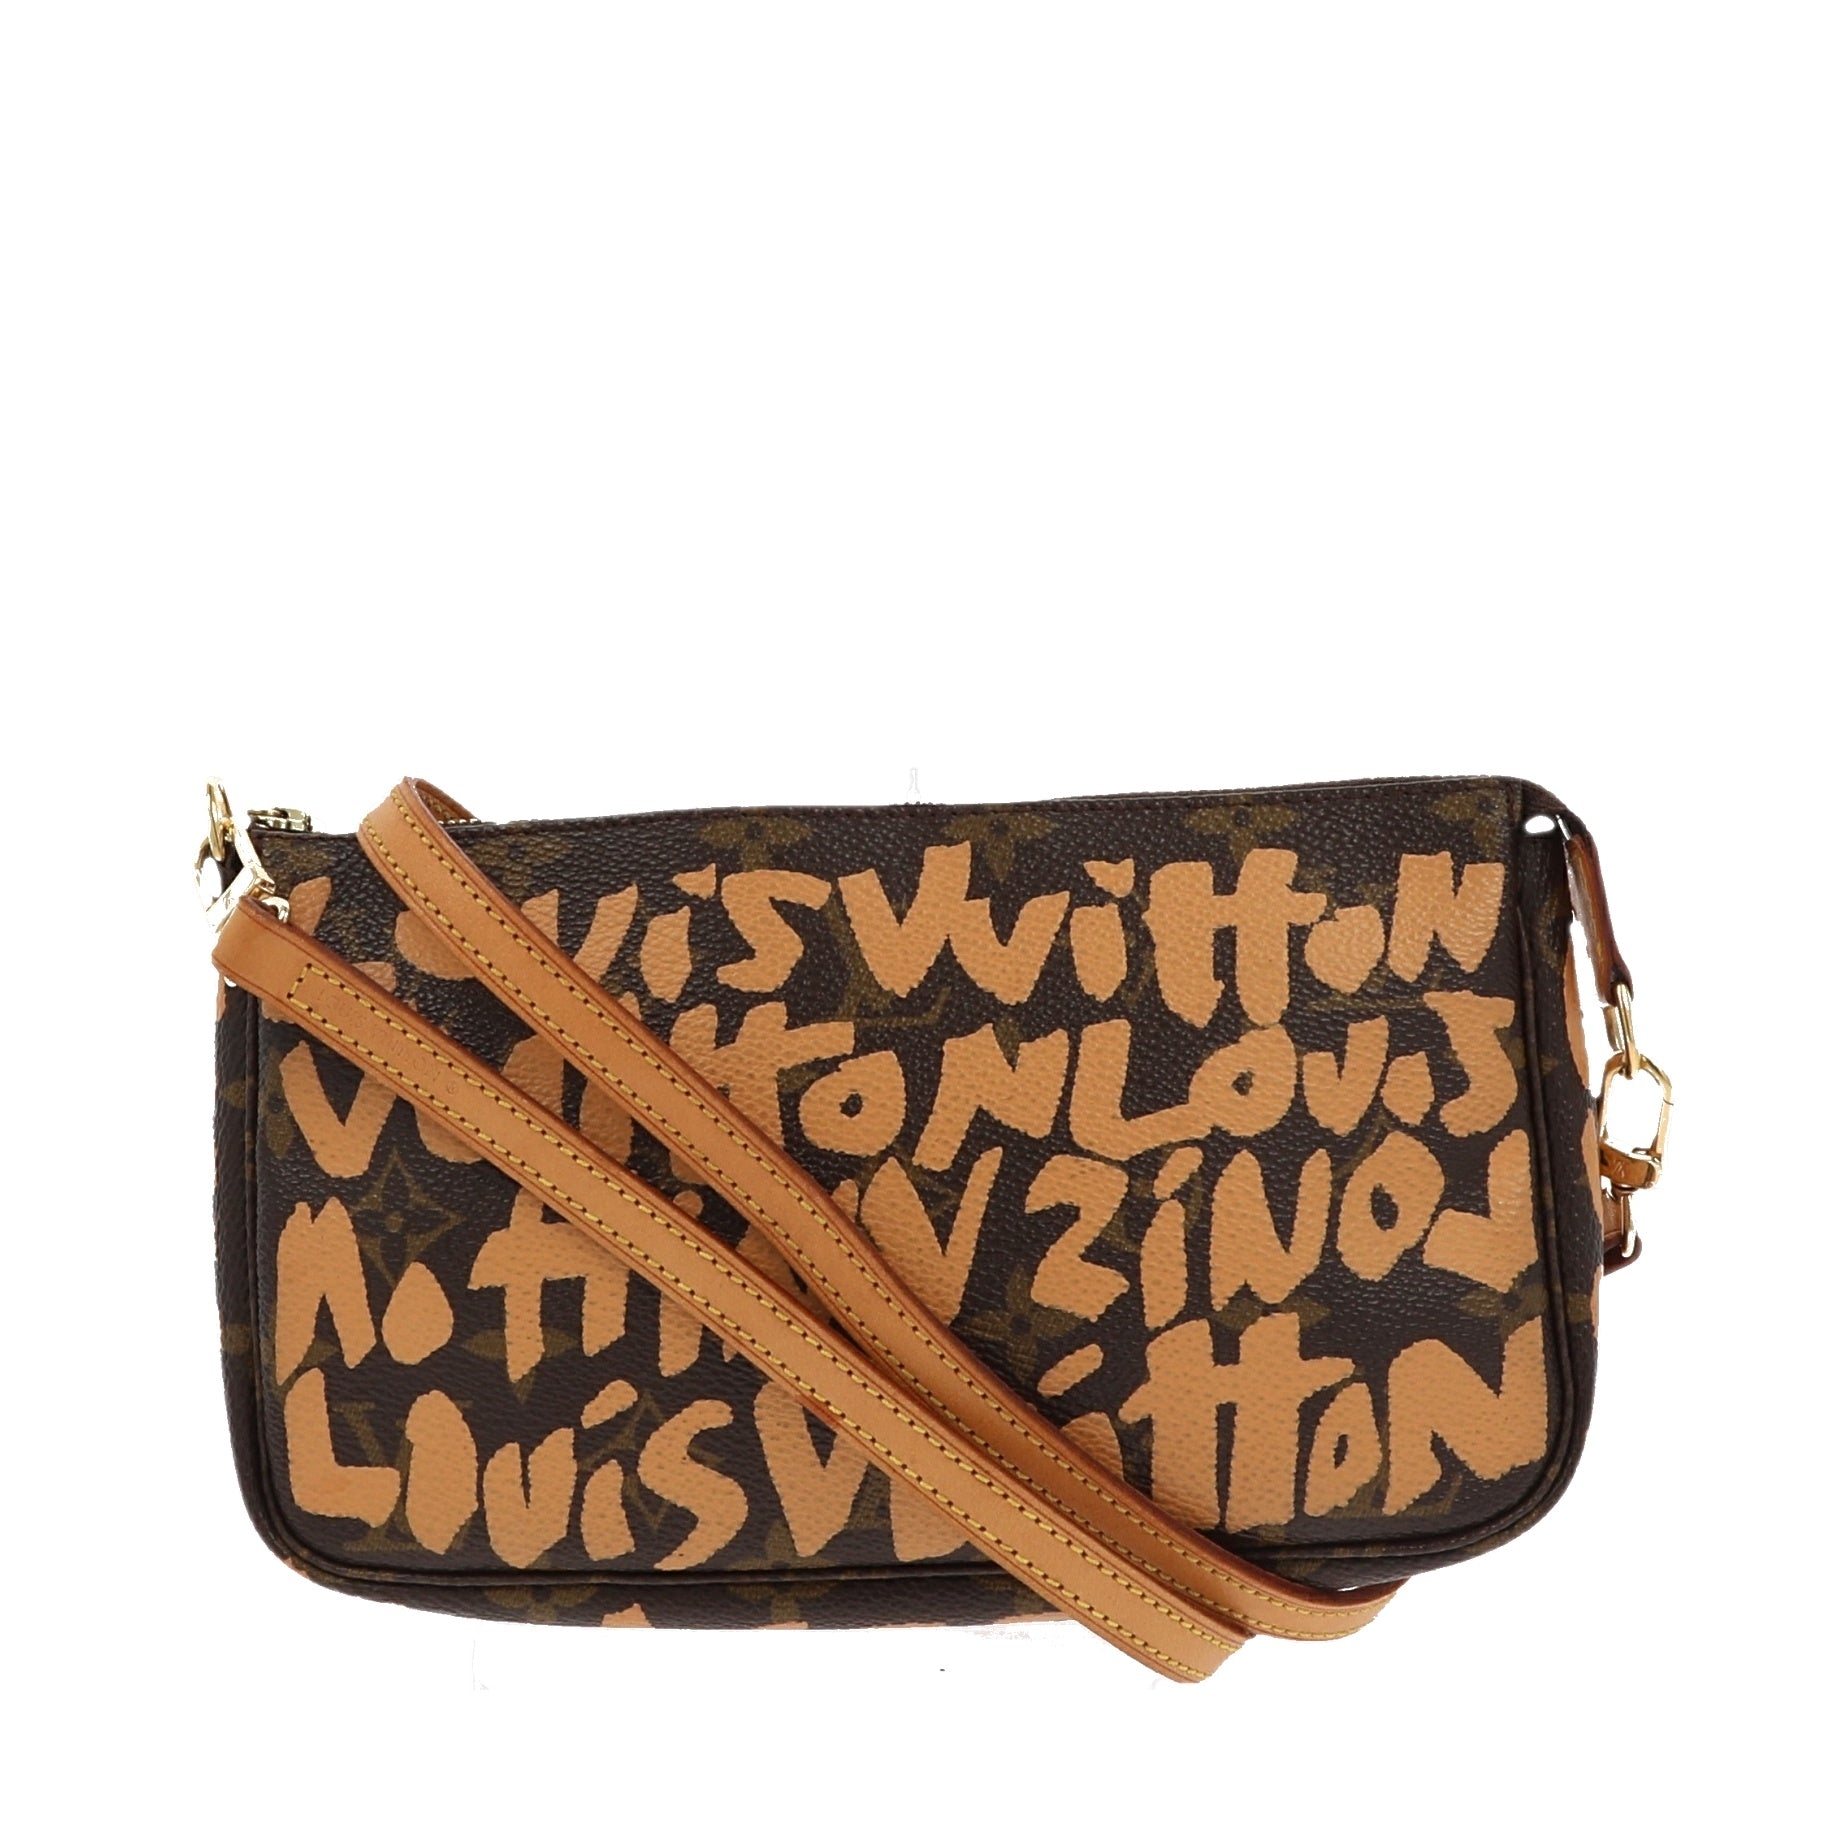 Louis Vuitton, Bags, Steven Sprouse Cheetah Bag Louis Vuitton